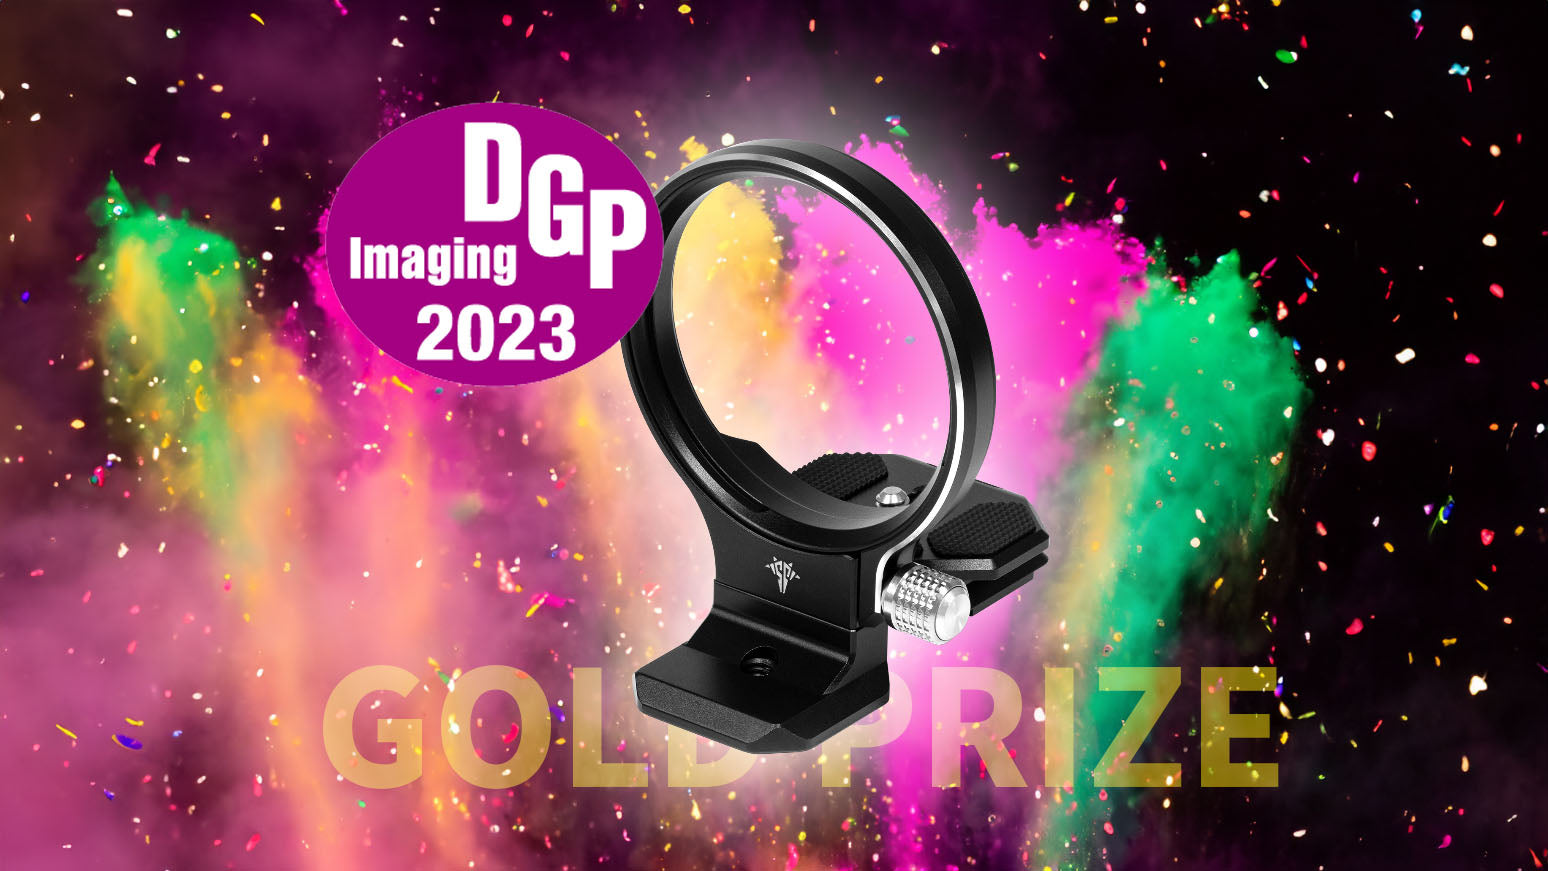 🎉 15% Celebrate Discount for winning "DGP Imaging Award 2023"  in Japan 🎉